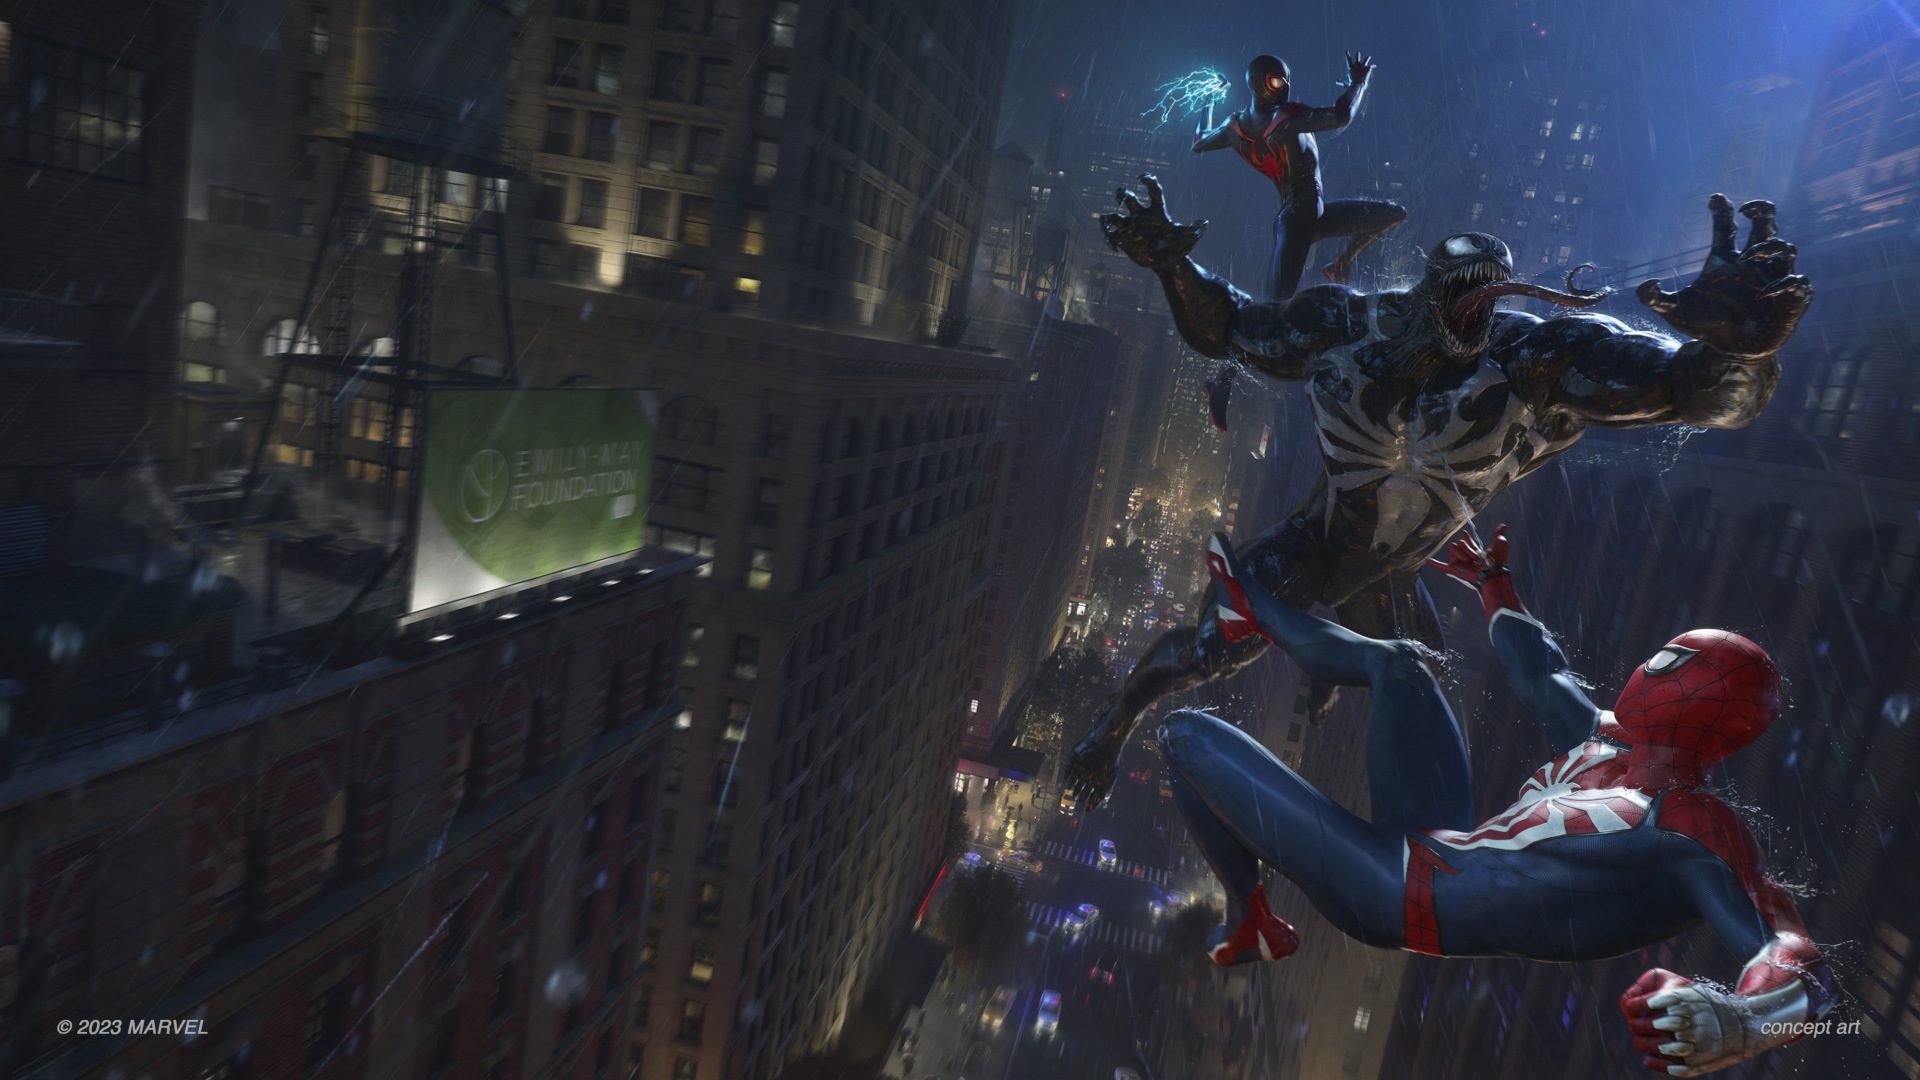 Novo bundle do PS5 com Marvel's Spider-Man 2 já está disponível no Brasil -  PSX Brasil